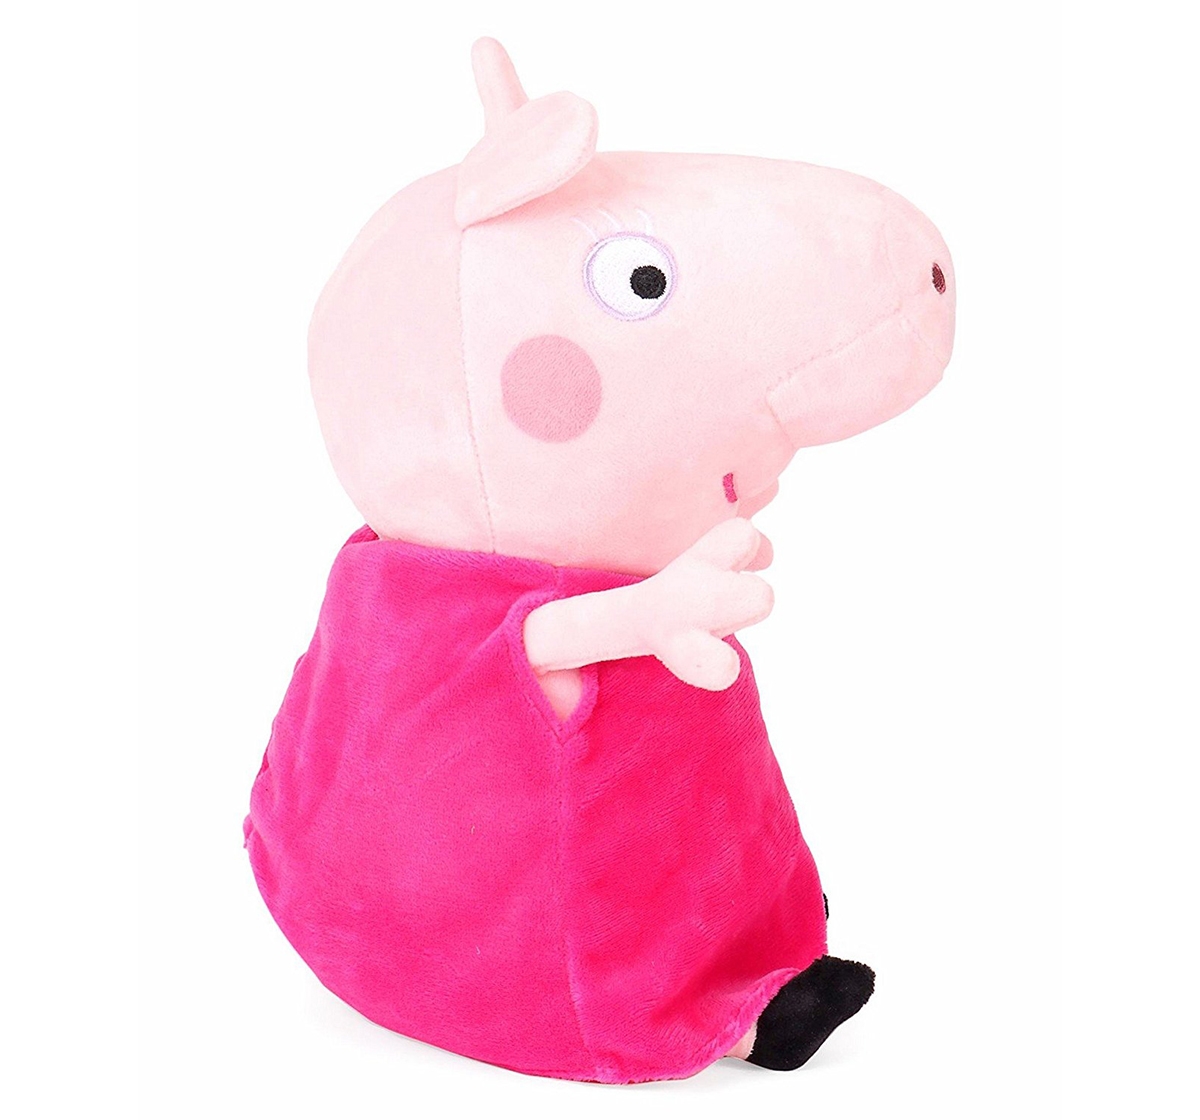 Peppa Pig | Peppa Pig Granny 30 Cm Soft Toy for Kids age 3Y+ (Pink)